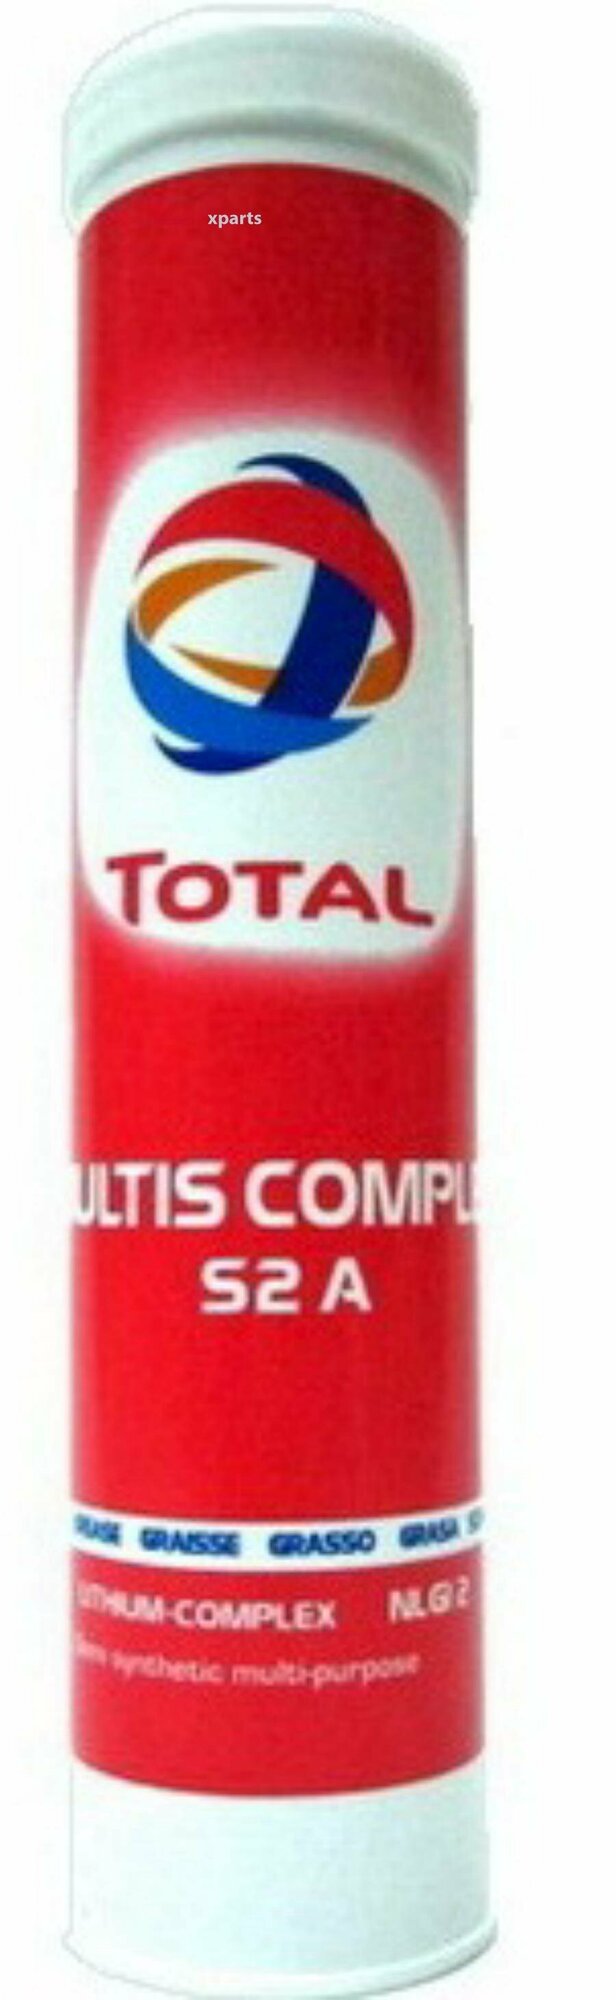 TOTALENERGIES 160833 TOTAL MULTIS COMPLEX S2A Индустриальная смазка (пластик/ЕС) (0.4L)